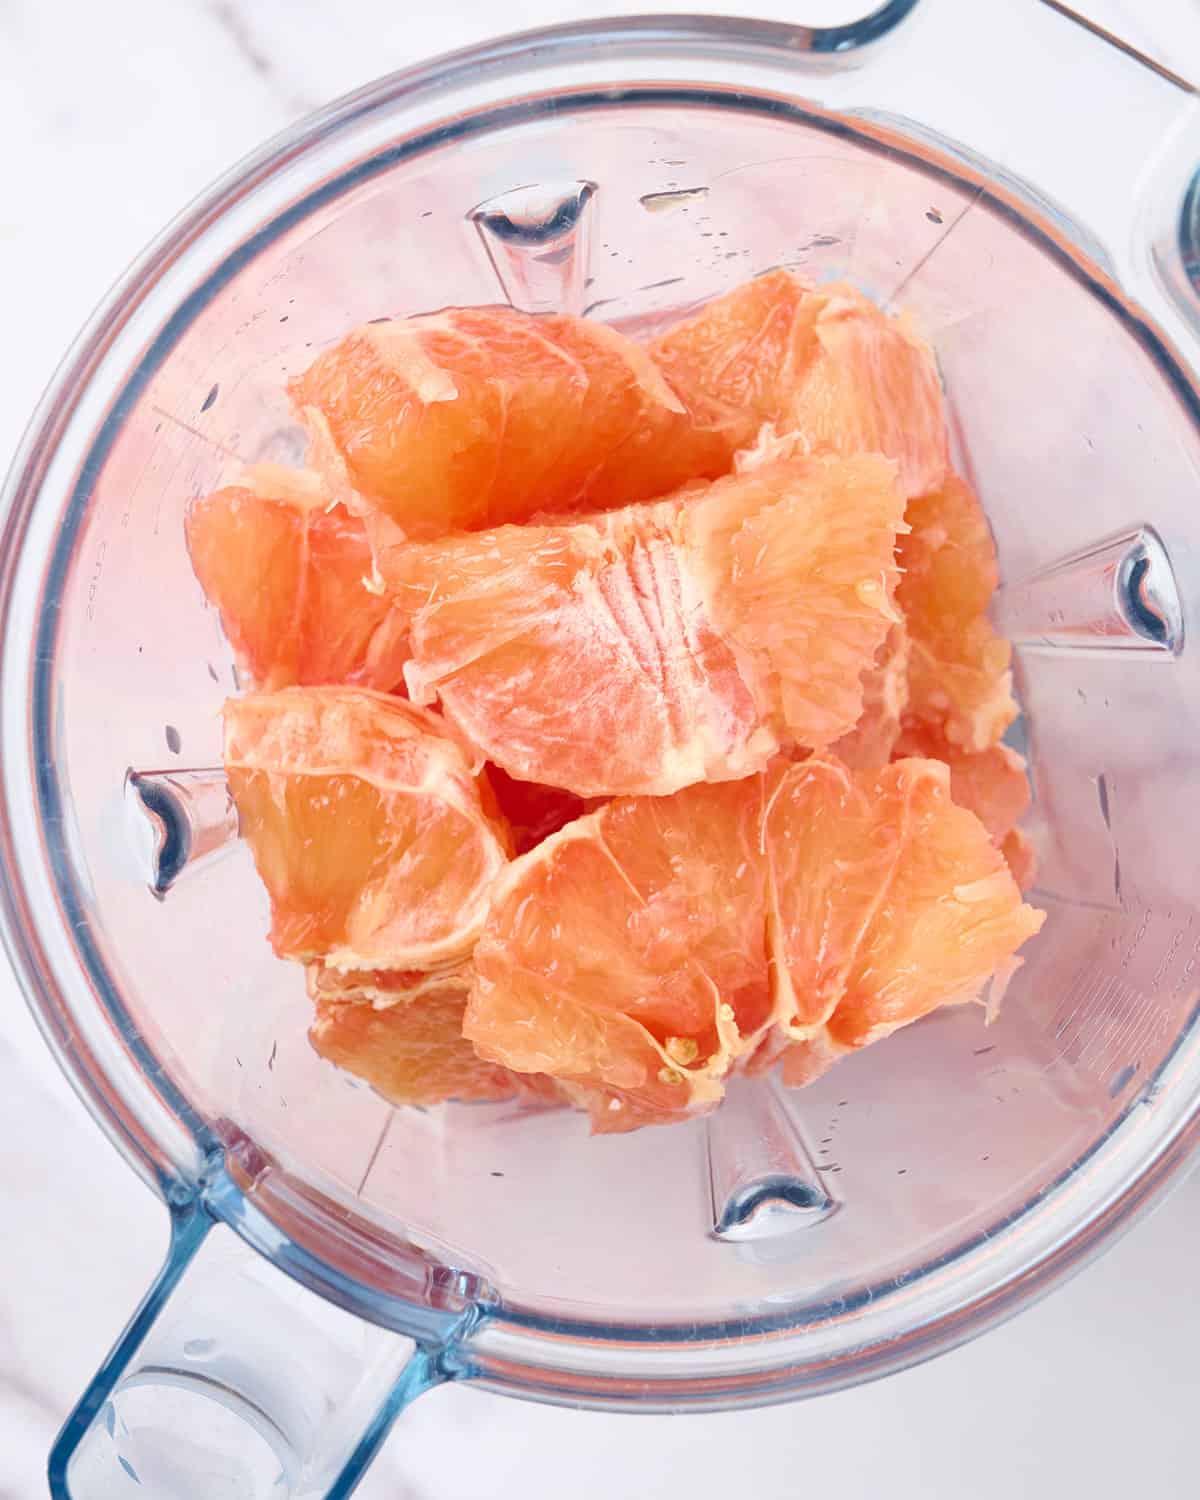 Grapefruit wedges in the blender to make freshly squeezed grapefruit juice.